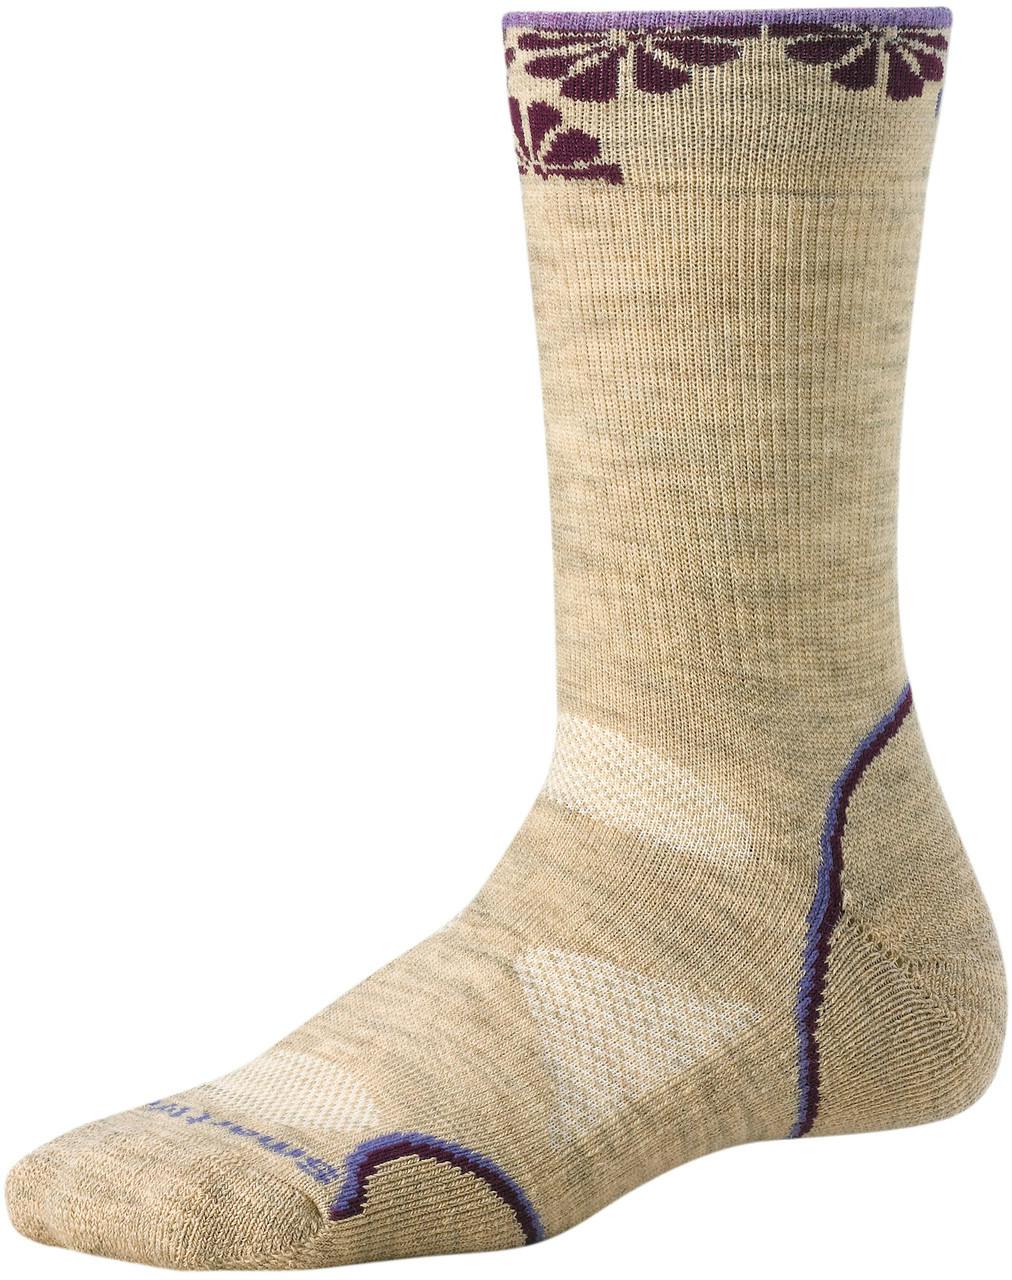 PhD Outdoor Medium Crew Socks Oatmeal/Lavender